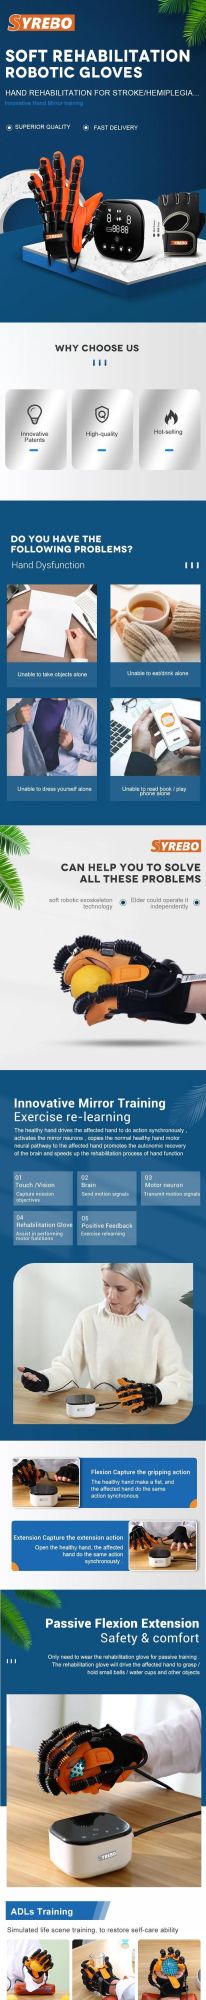 Stroke Rehabilitation Equipment, Stroke Hemiplegia Rehabilitation Training Equipment Hand Finger Training Device